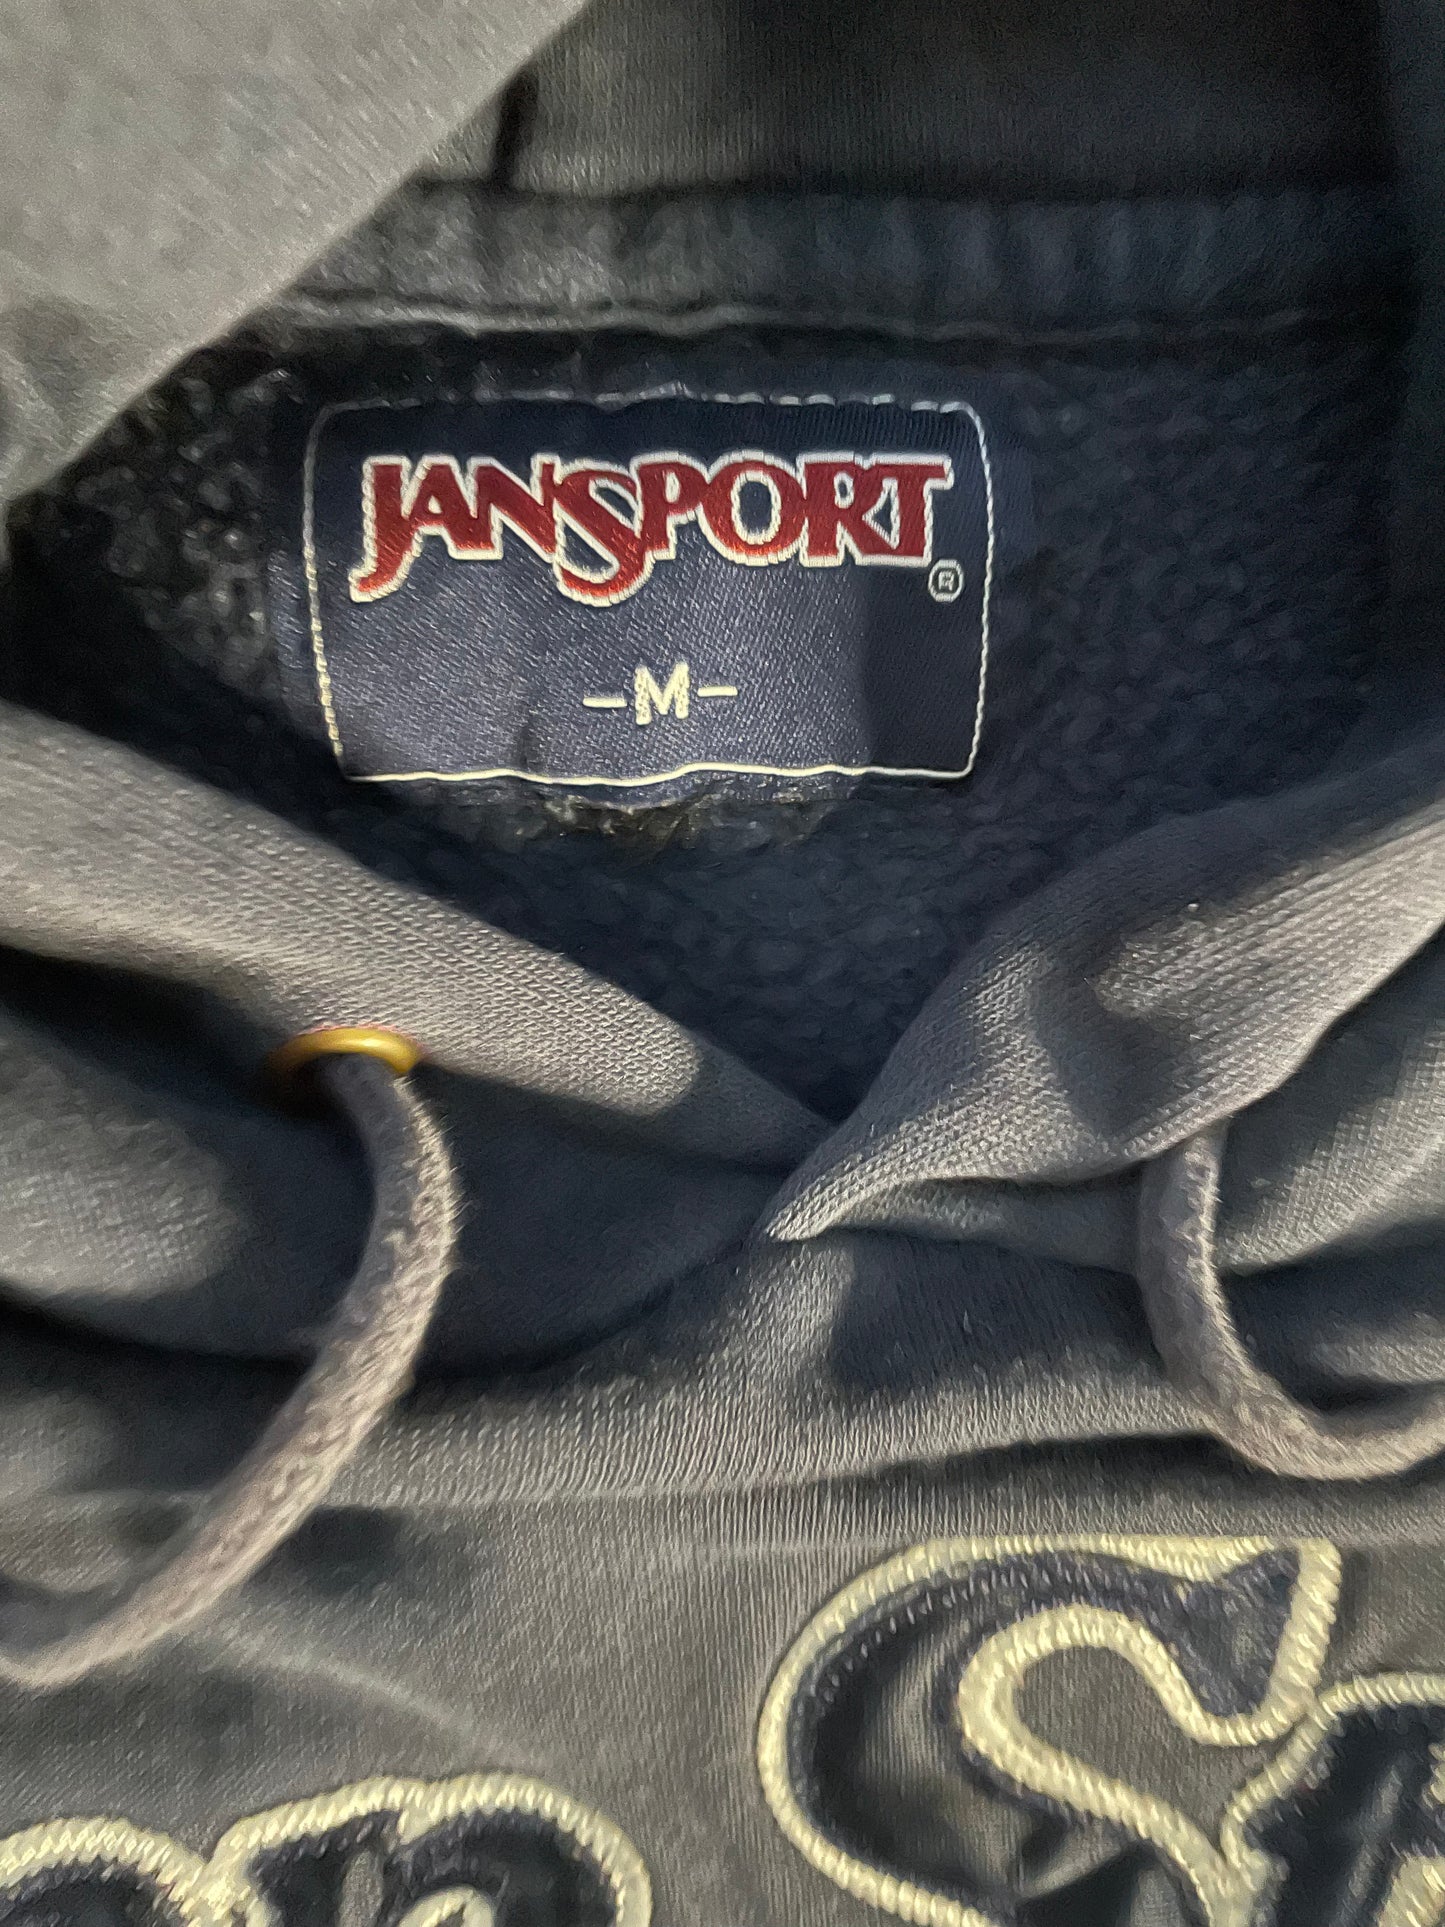 Authentic Penn State Jansport M